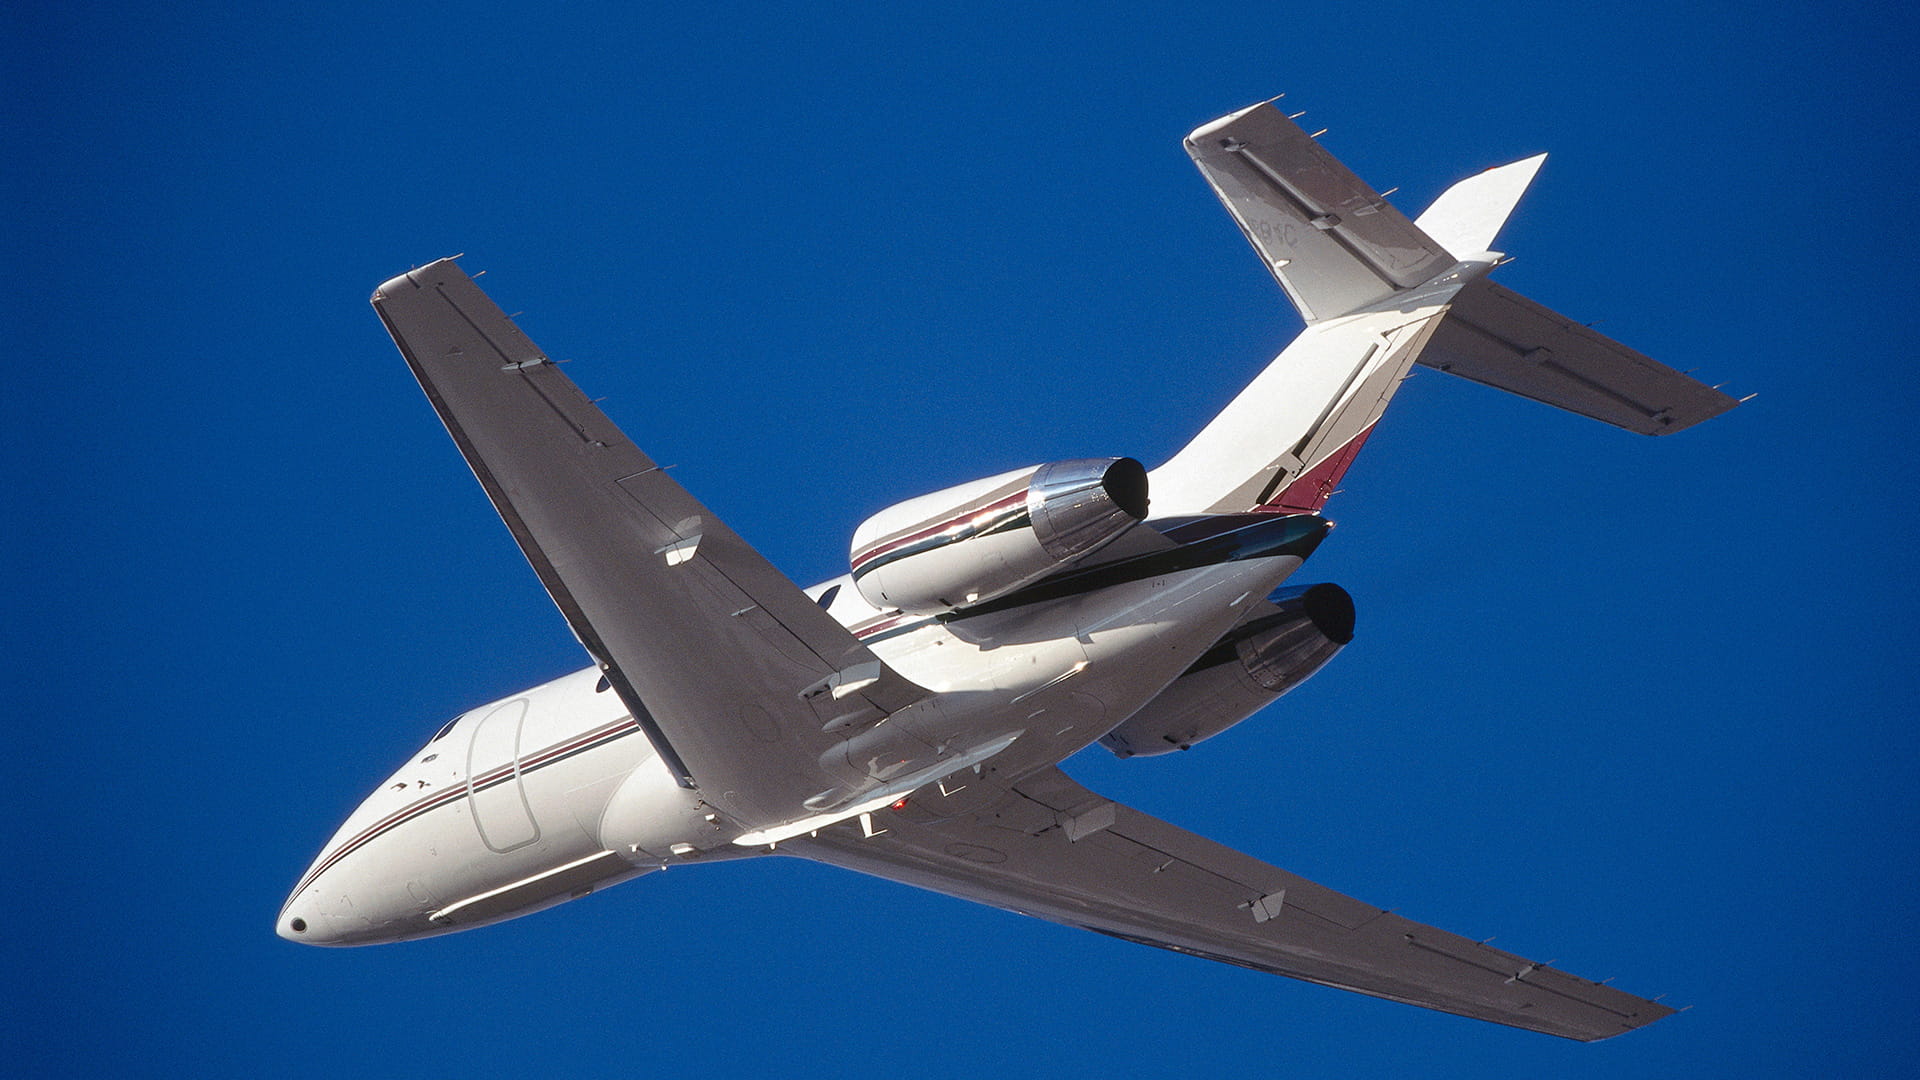 CMU-4000 airplane in the sky